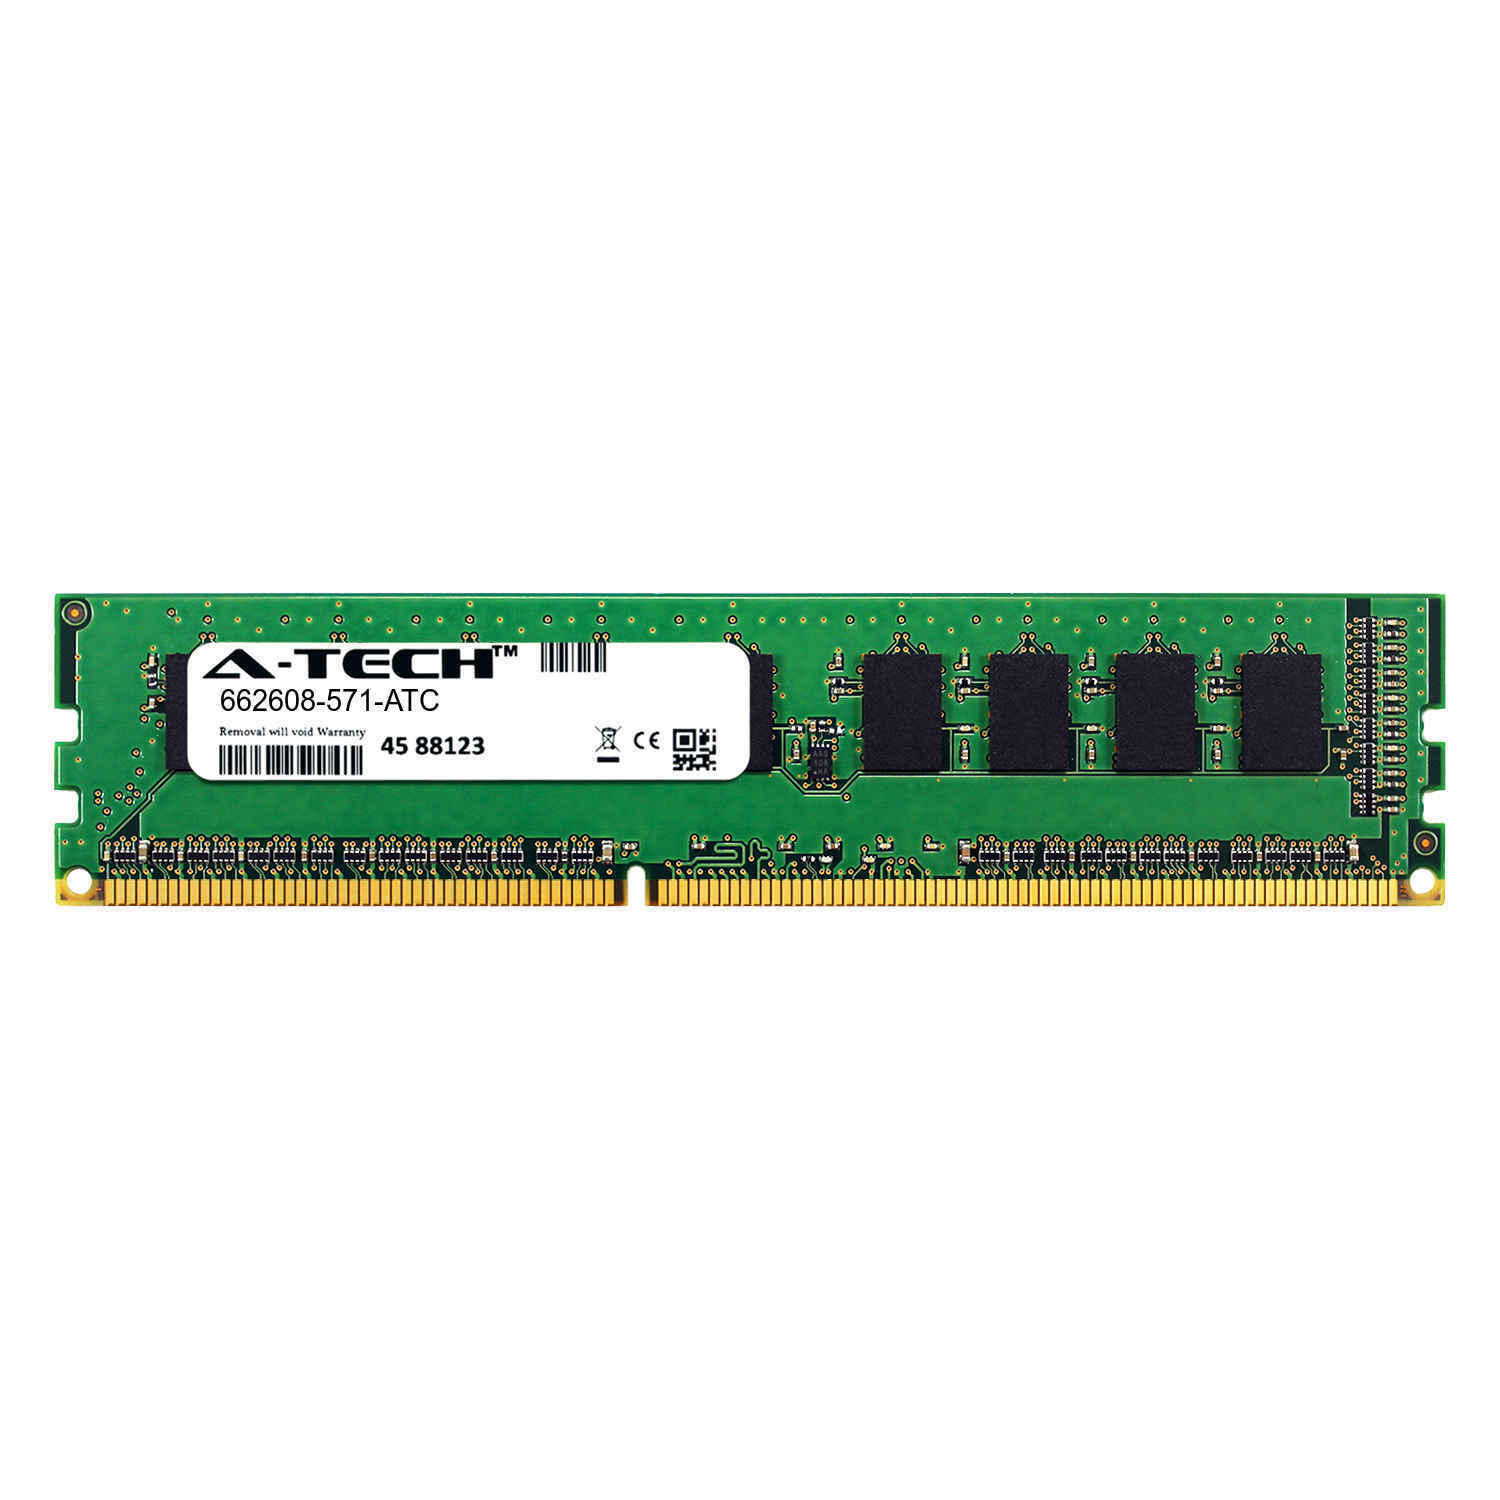 2GB DDR3-1600 PC3-12800E ECC UDIMM (HP 662608-571 Equivalent) Server Memory RAM